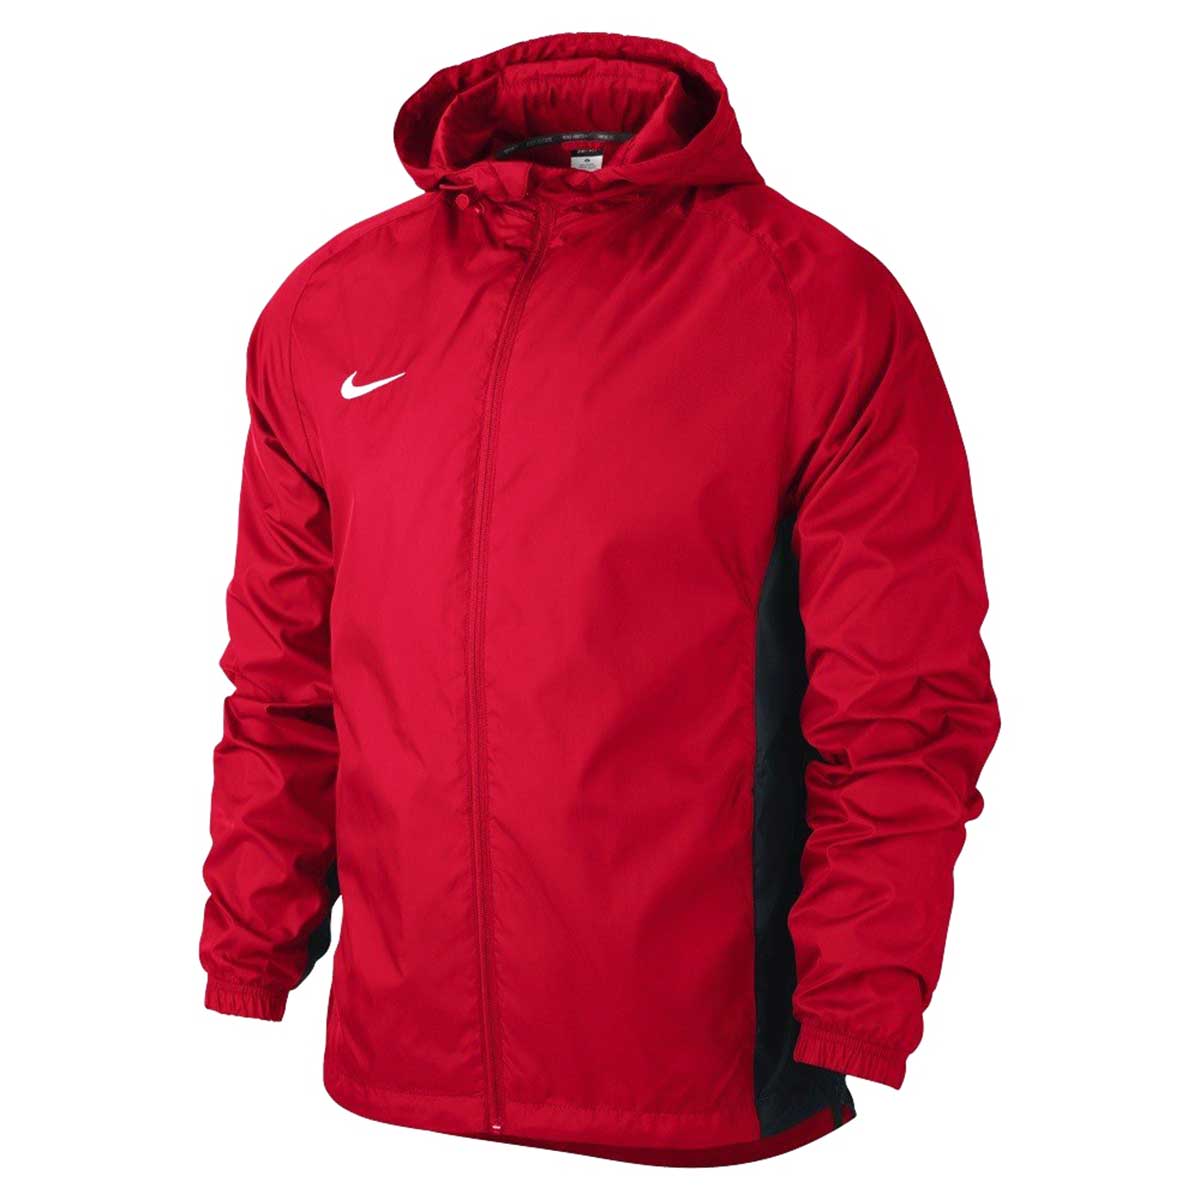 Buy Nike Academy Rain Jacket (Red) Online India| Nike Jackets ...